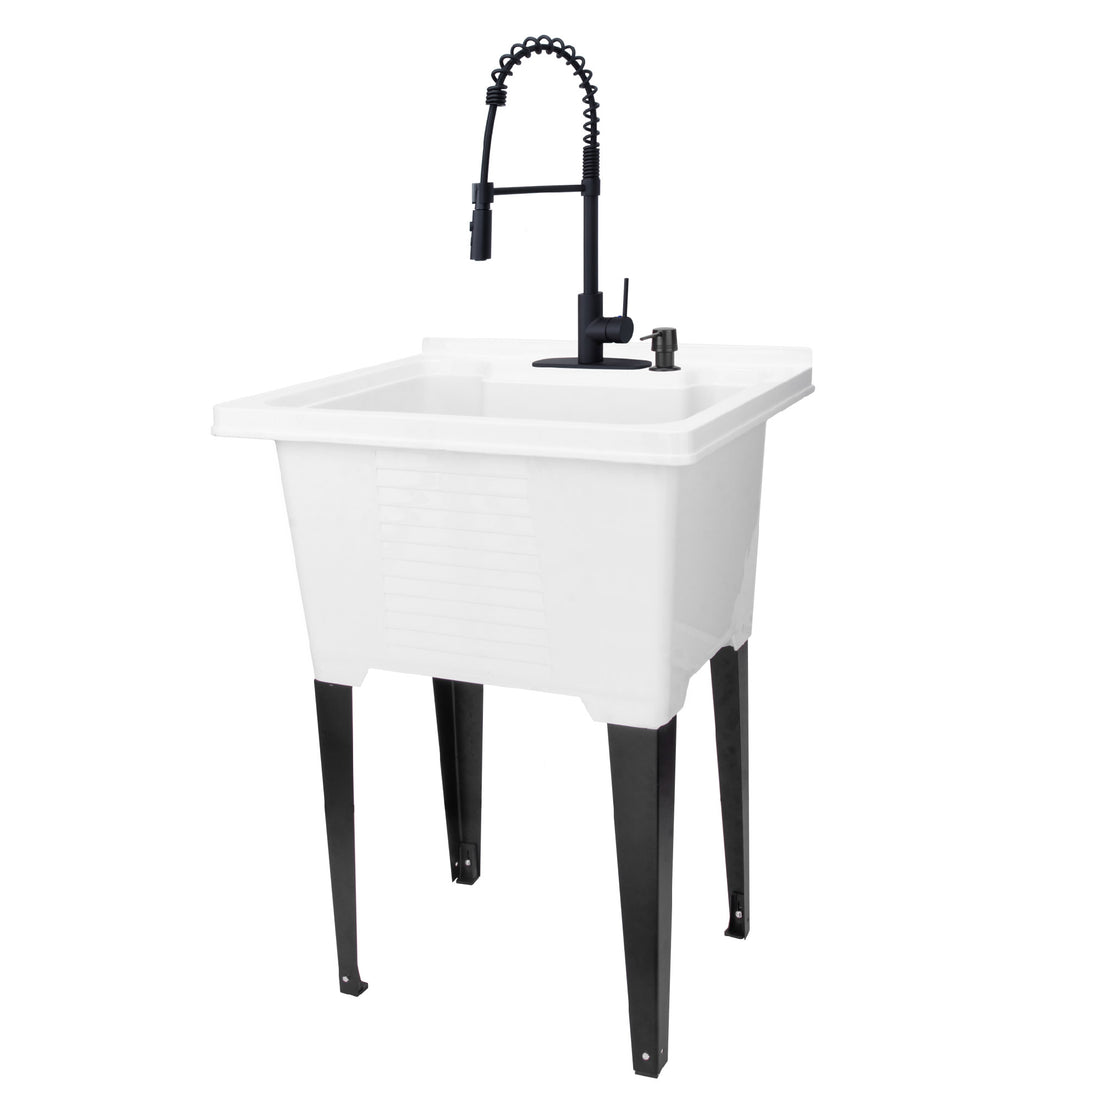 Tehila Luxe Freestanding White Utility Sink with Black Finish High-Arc Coil Pull-Down Faucet - Utility sinks vanites Tehila